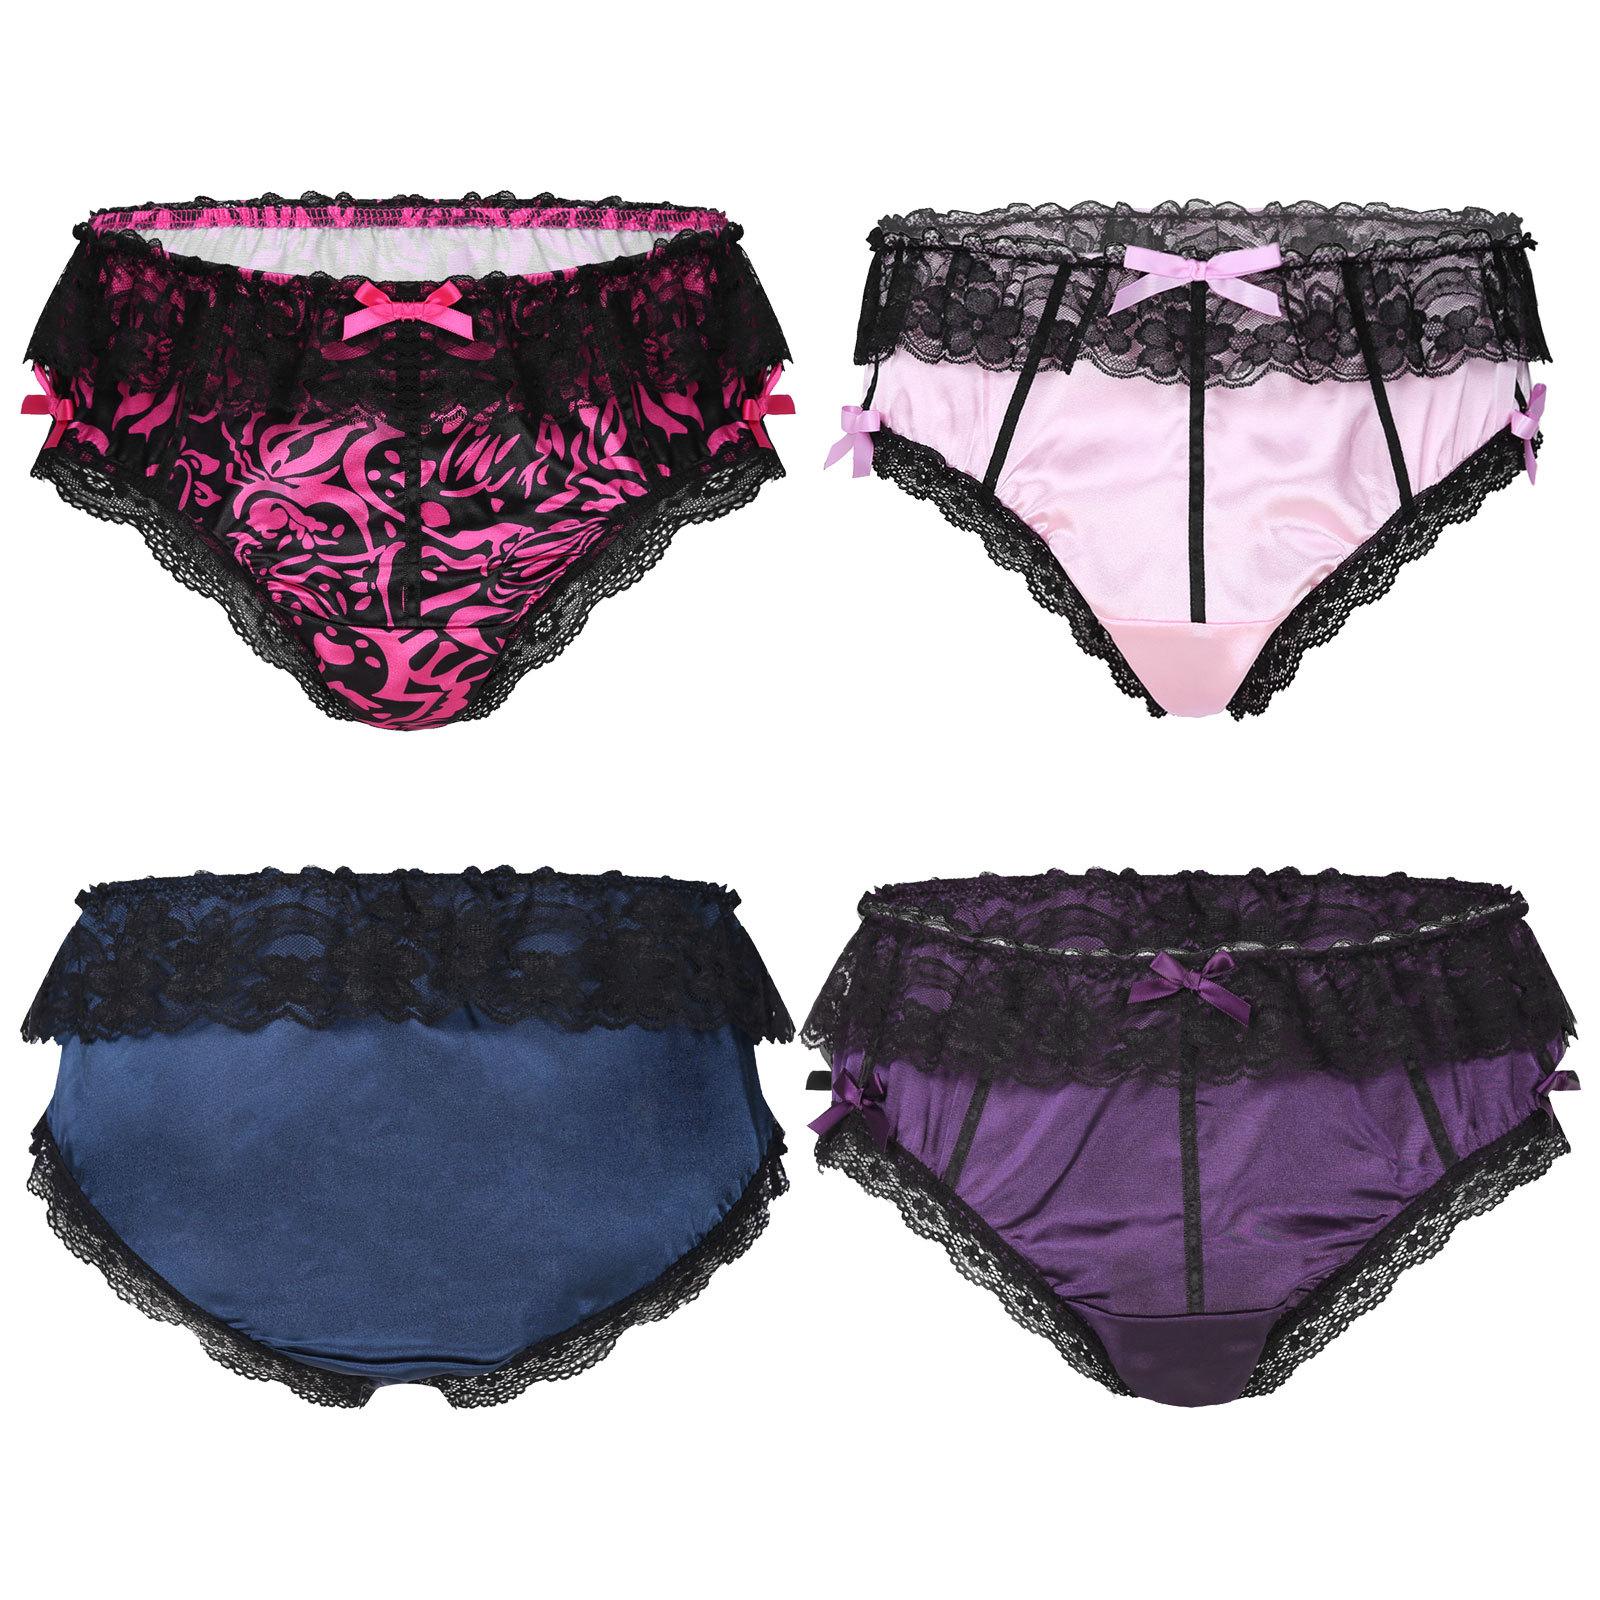 Aislor Sexy Men‘s Floral Lace Underwear Shiny Satin Crossdress Boxers Shorts Panties